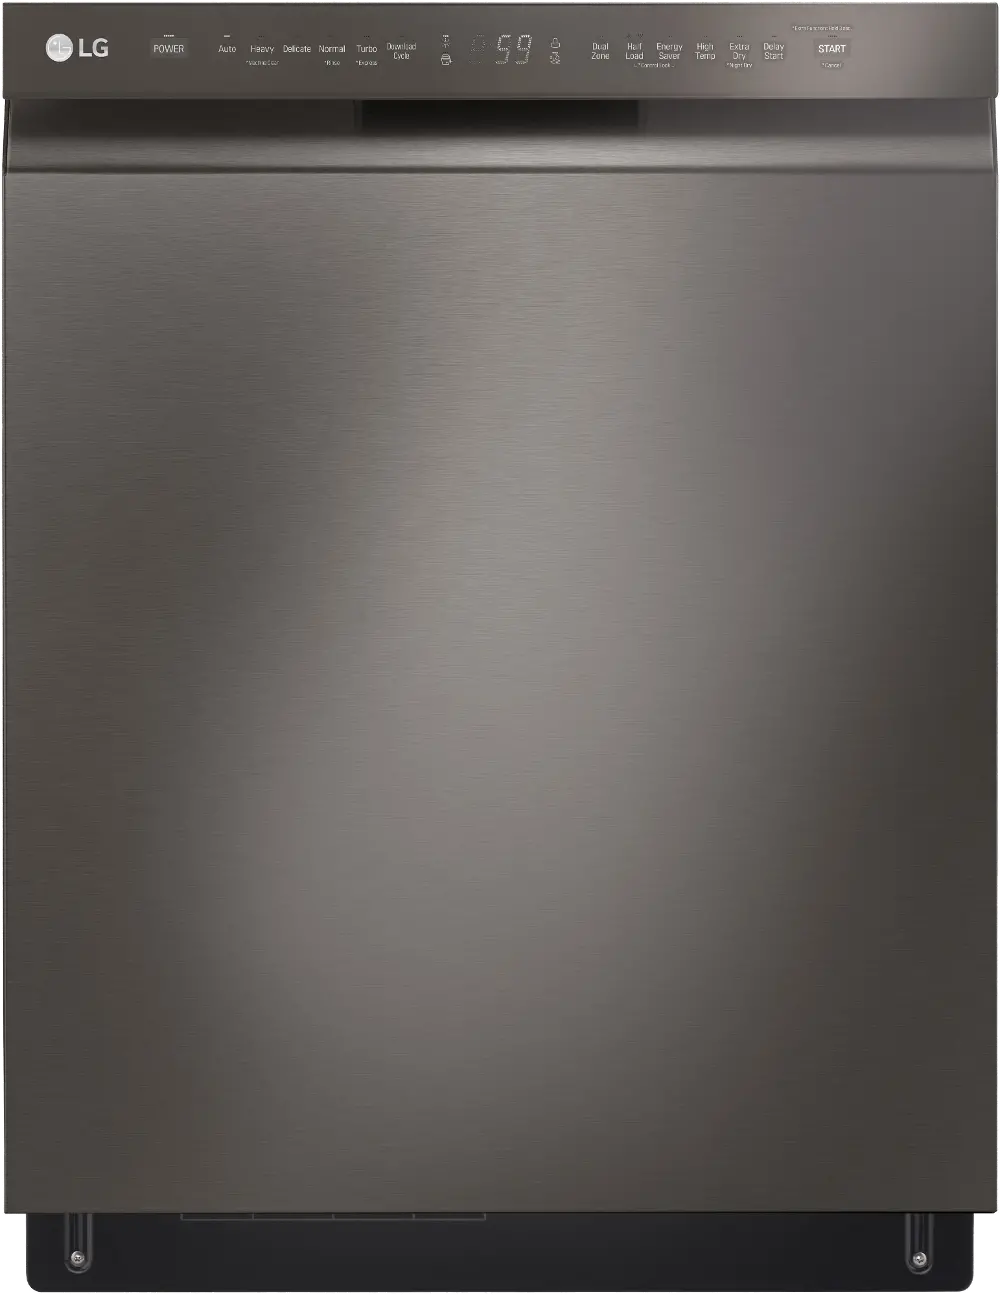 LDFN4542D LG Front Control Dishwasher - Black Stainless Steel-1